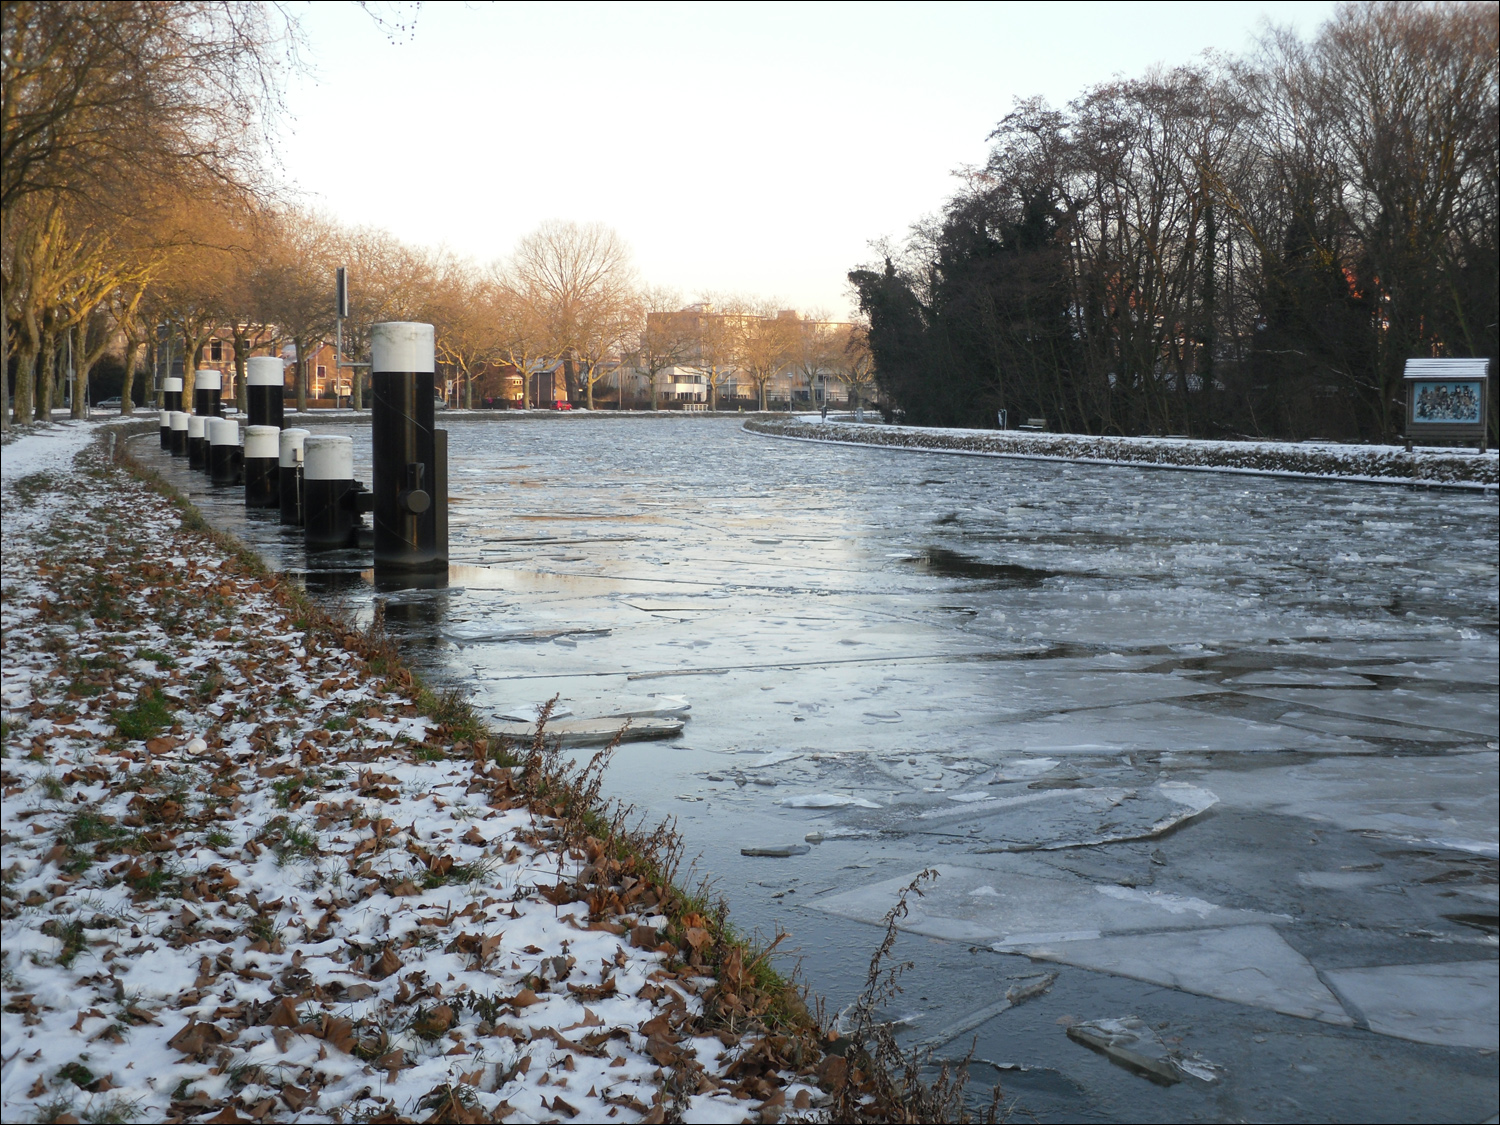 More frozen Delft canal